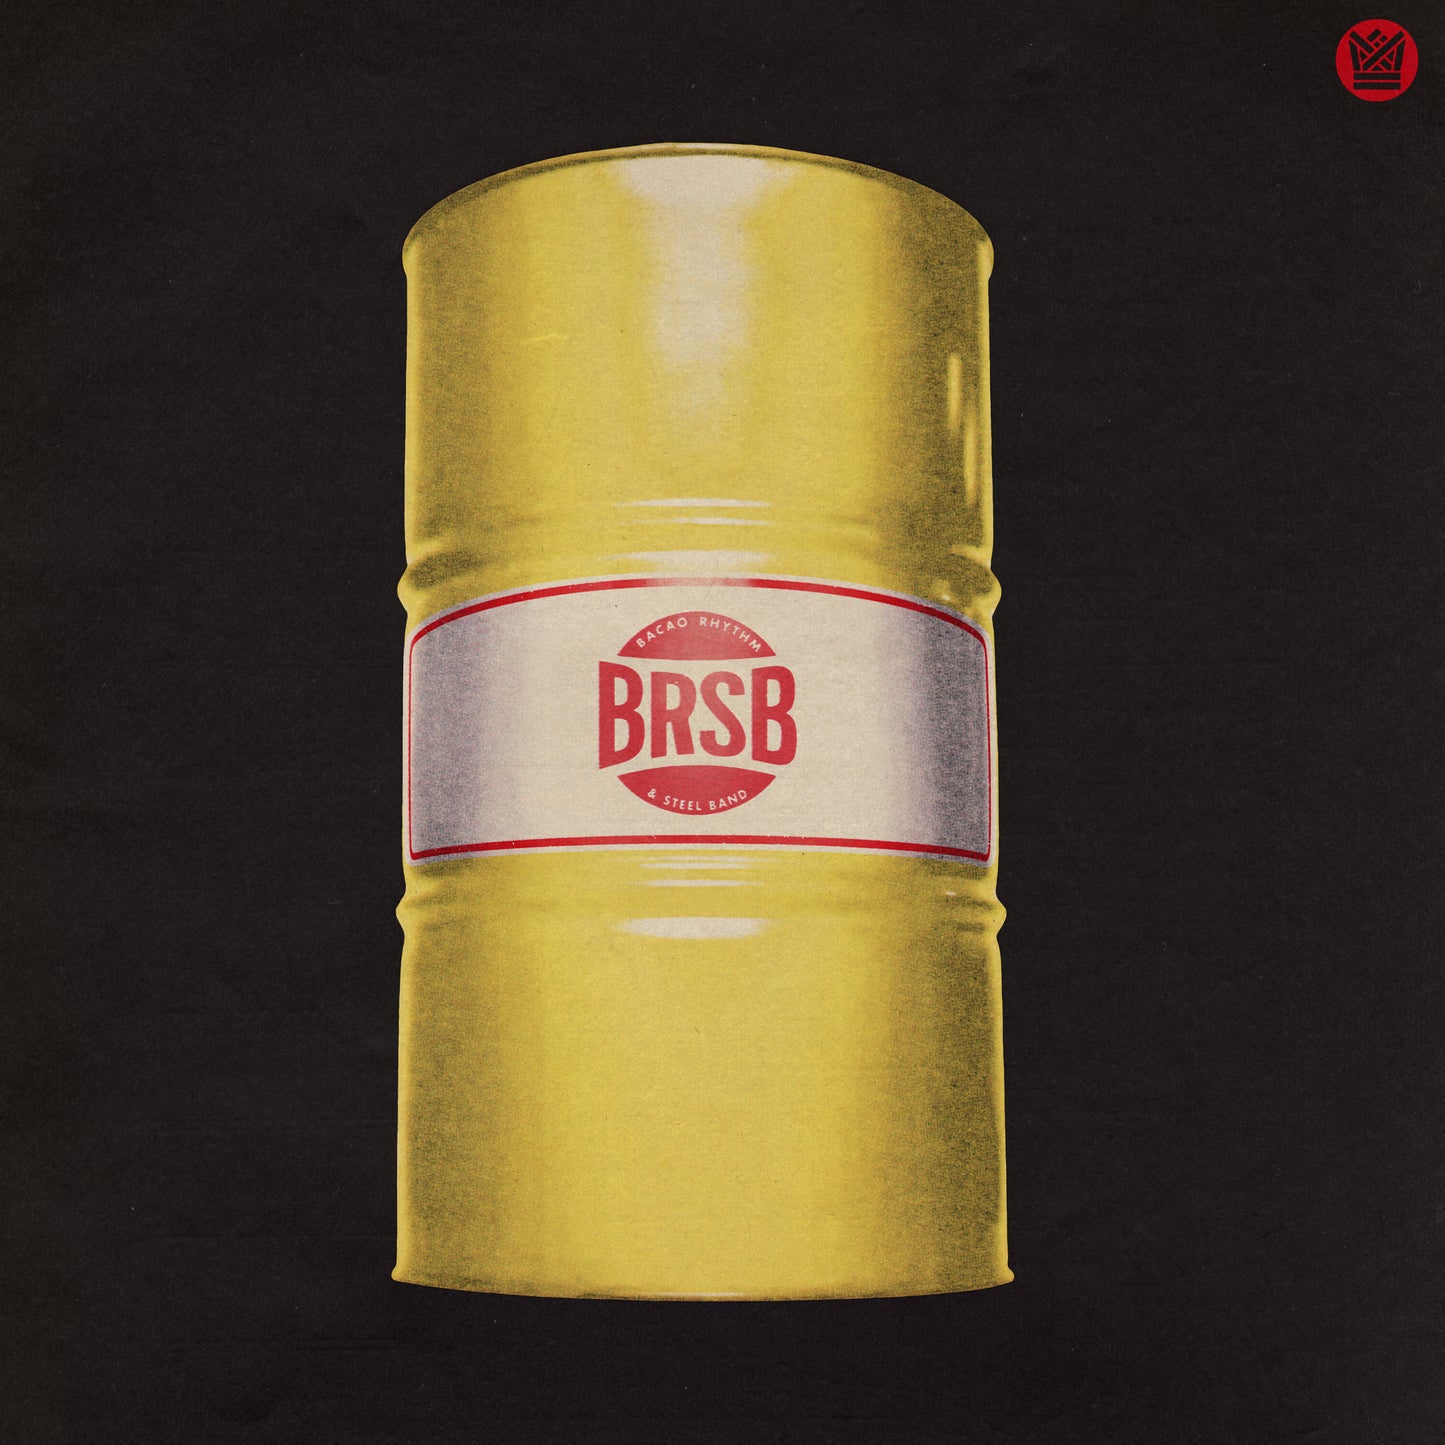 PRE-ORDER: Bacao Rhythm & Steel Band "BRSB" LP (Yellow)